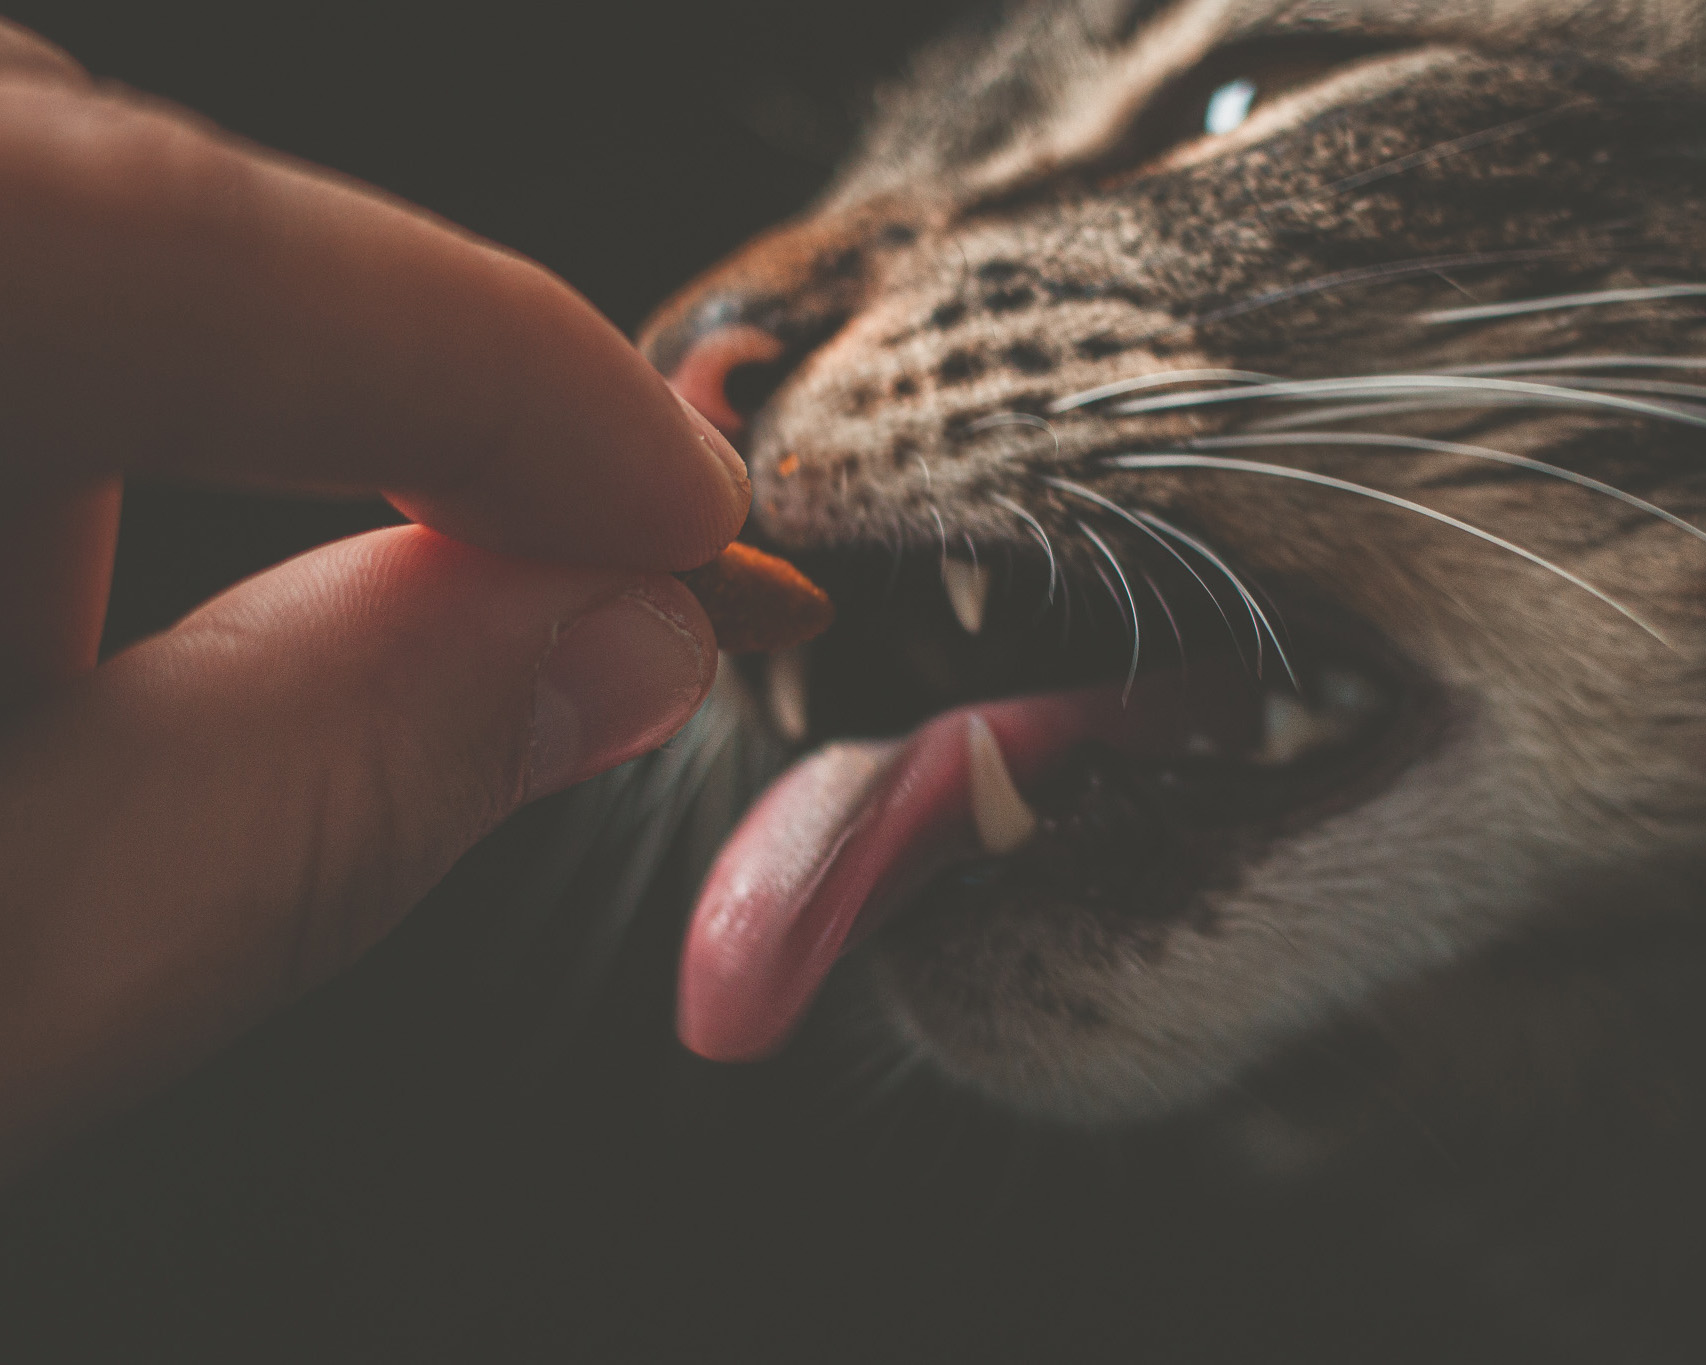 A hand feeding a cat a treat